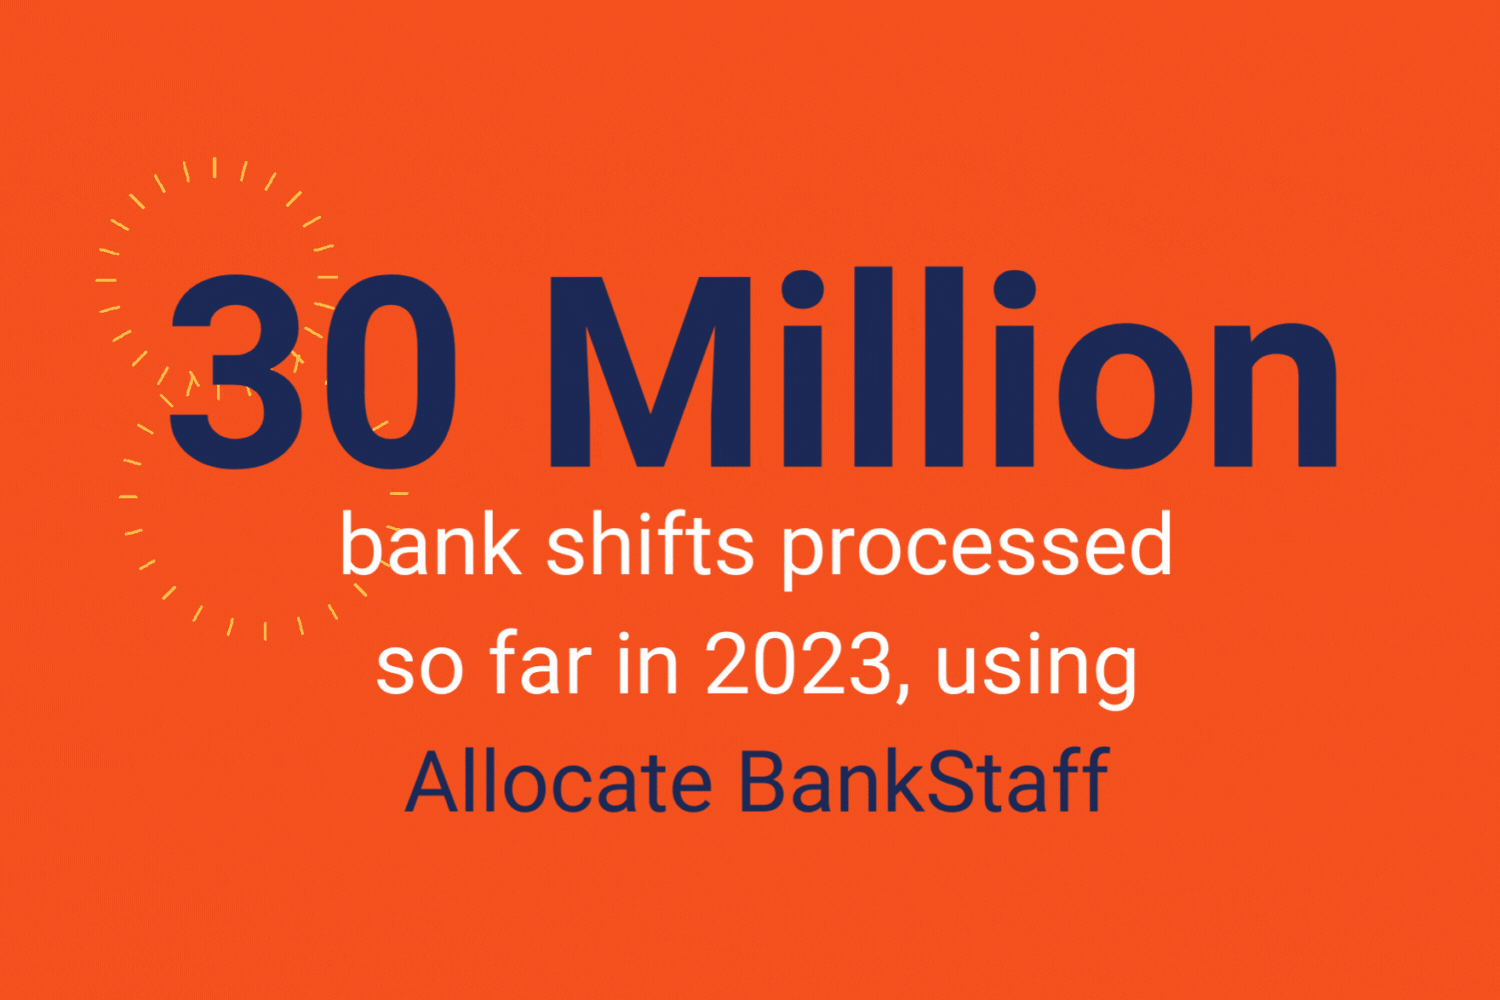 30 Million bank shifts processed so far in 2023, using Allocate BankStaff